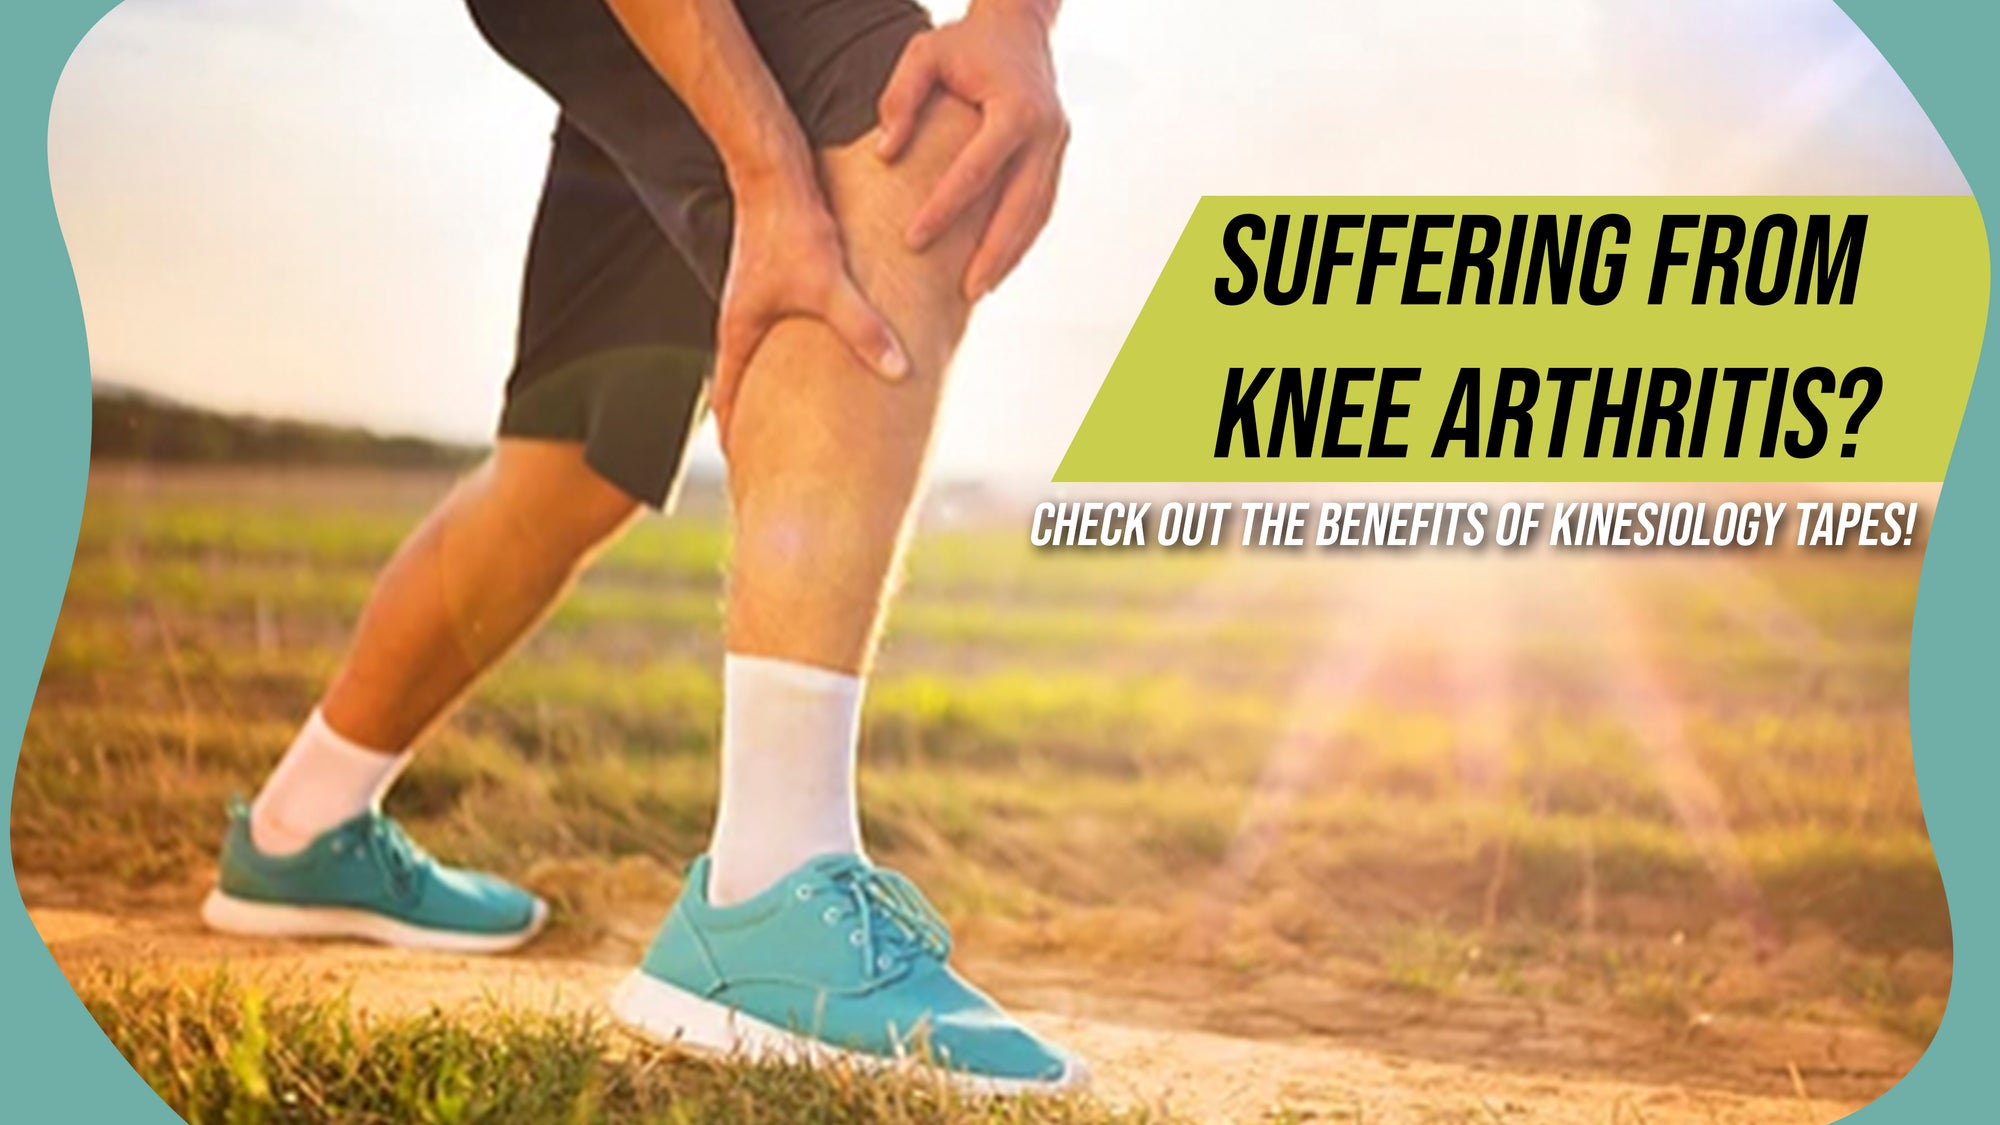 Can kinesiology tape help with knee arthritis?